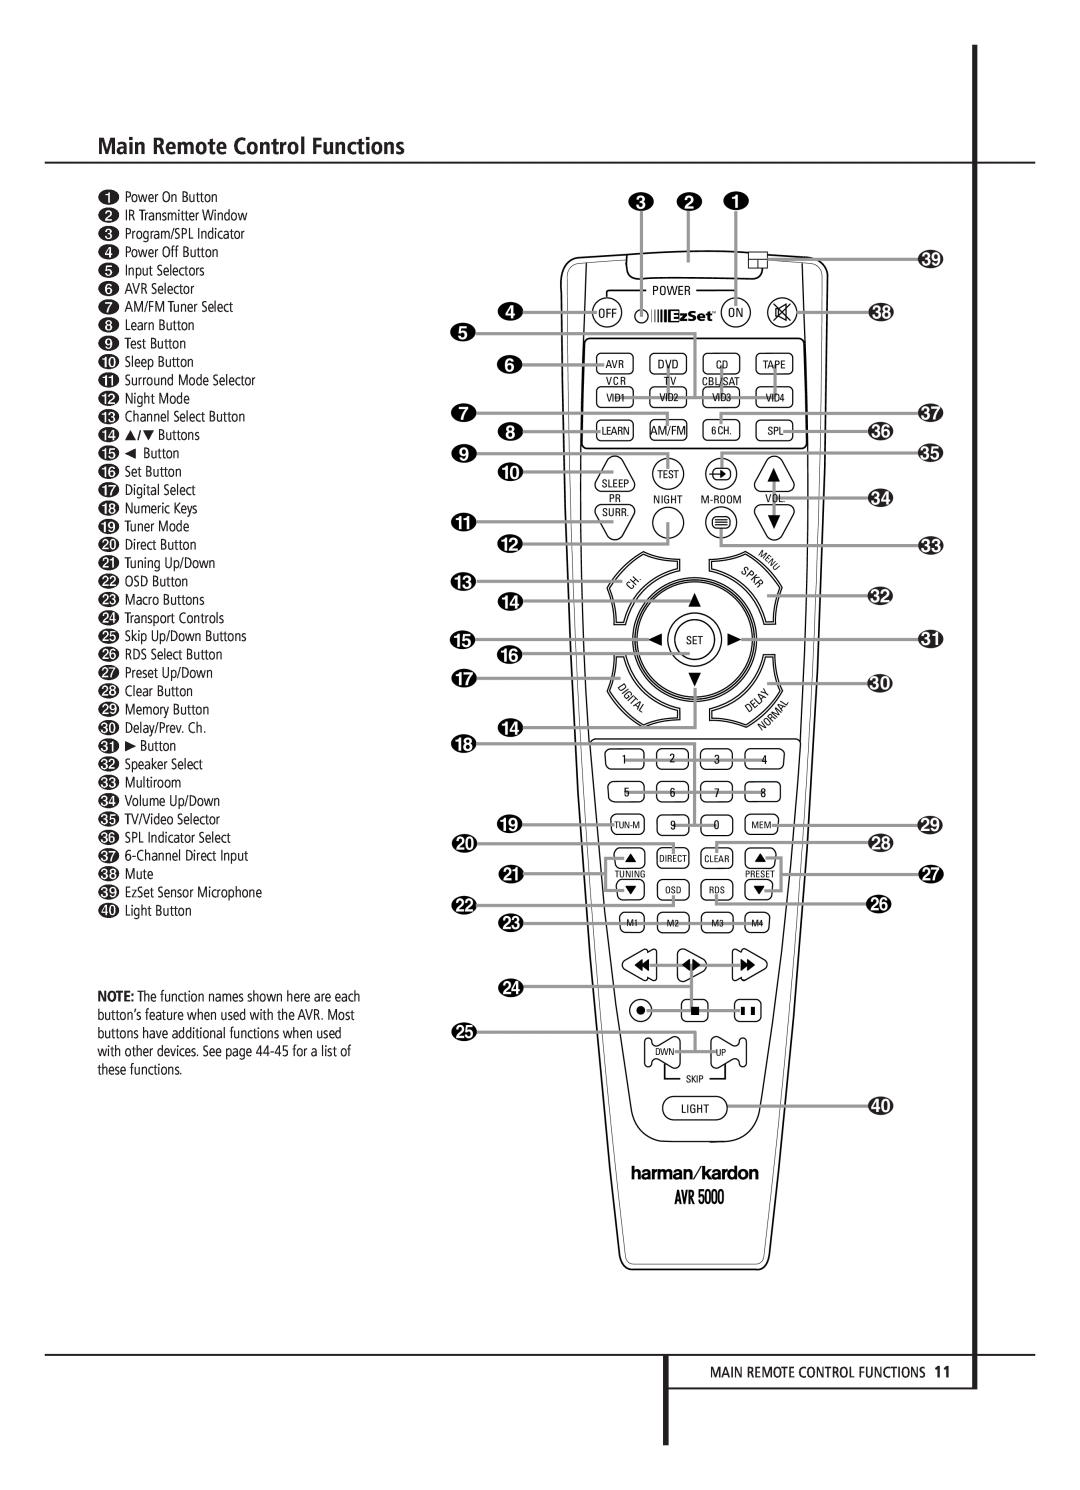 Harman-Kardon AVR 5000 owner manual Main Remote Control Functions, c b a 